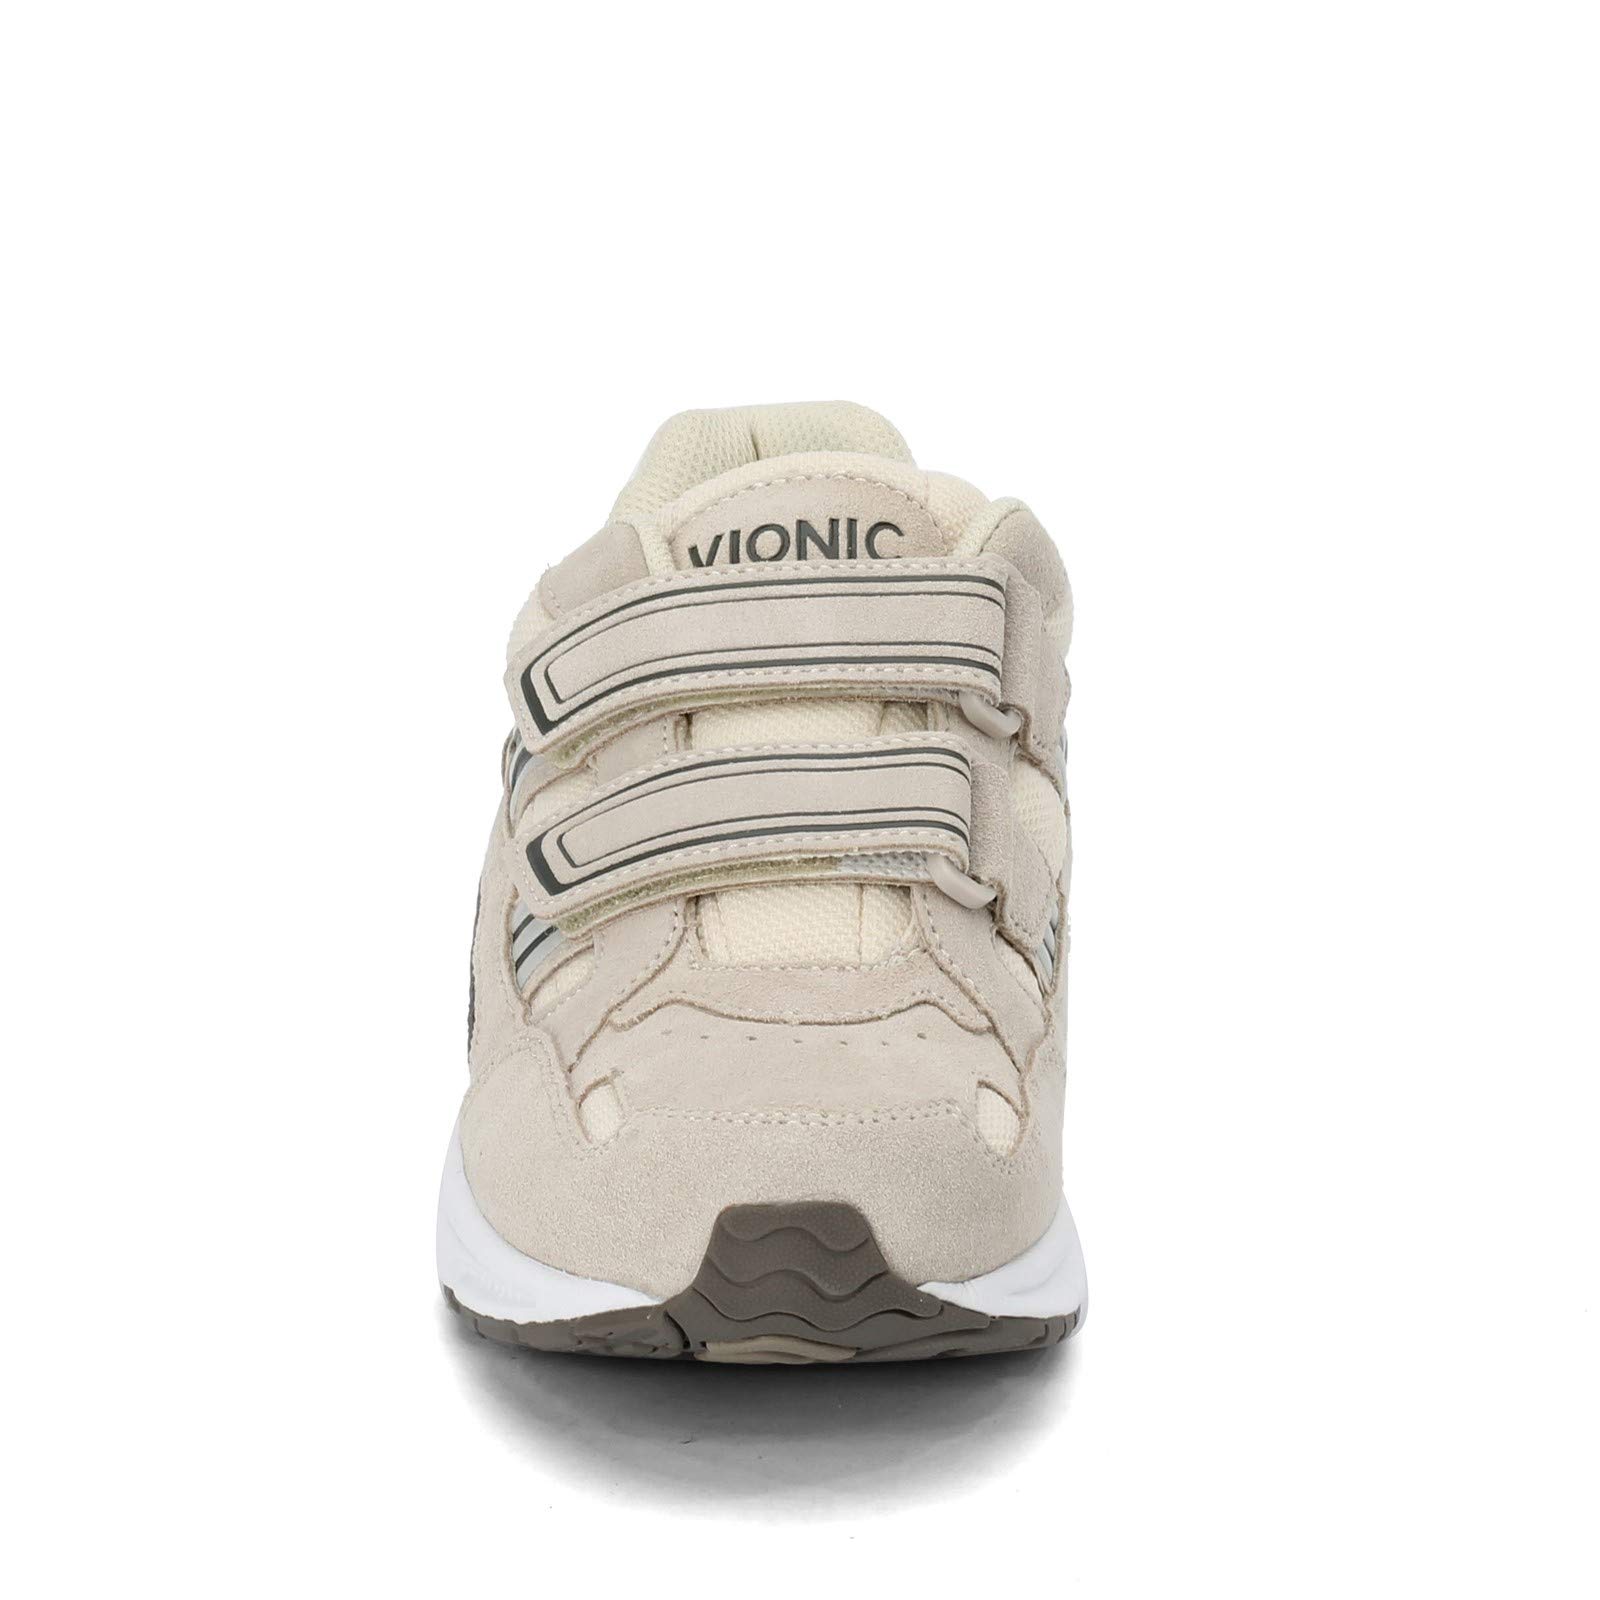 Vionic Tabi Women's Orthotic Walking Shoe - Strap Cl Cream Suede - 10.5 Medium